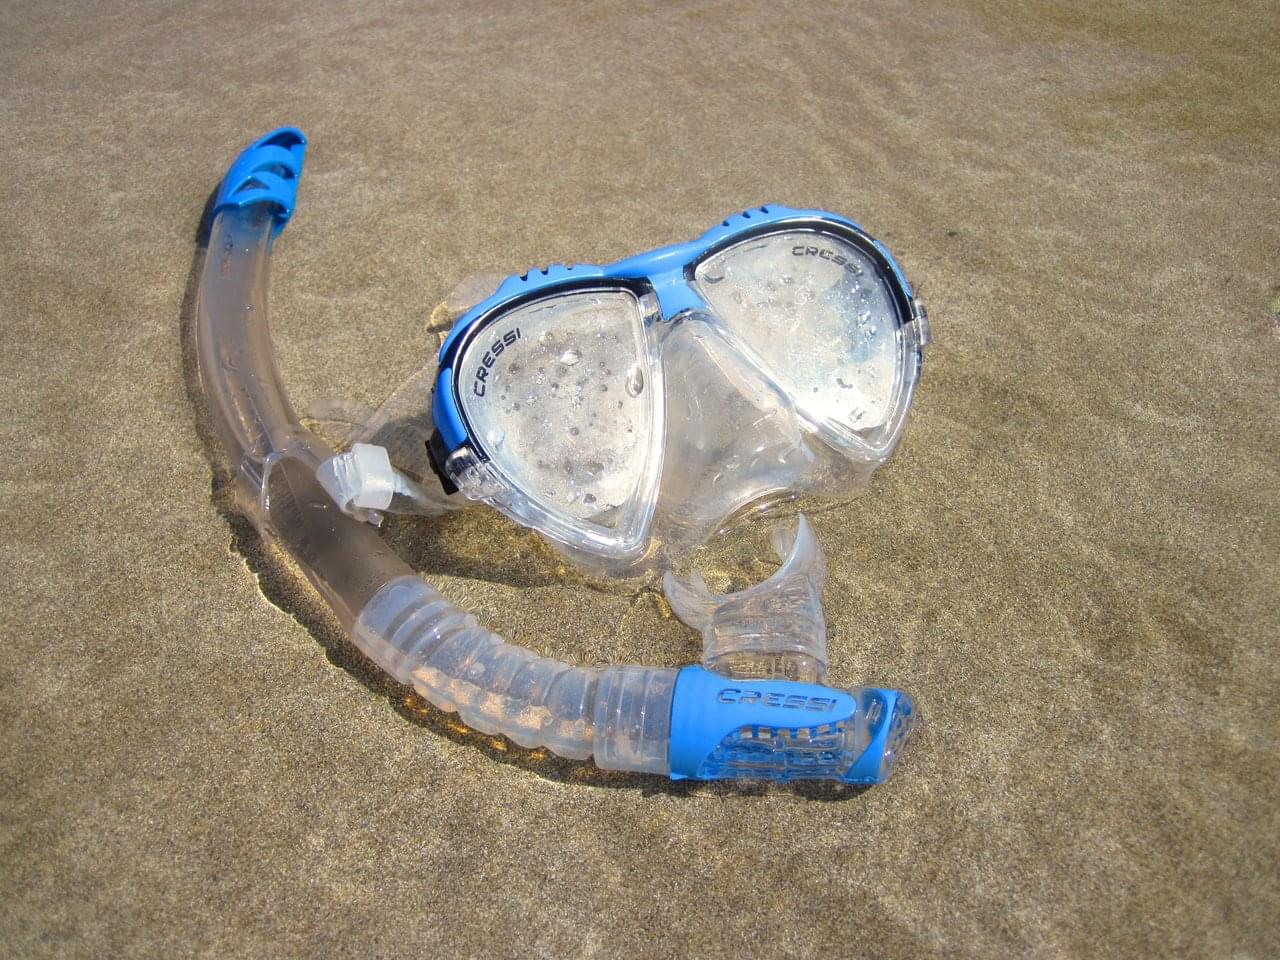 semi dry snorkel at the beach